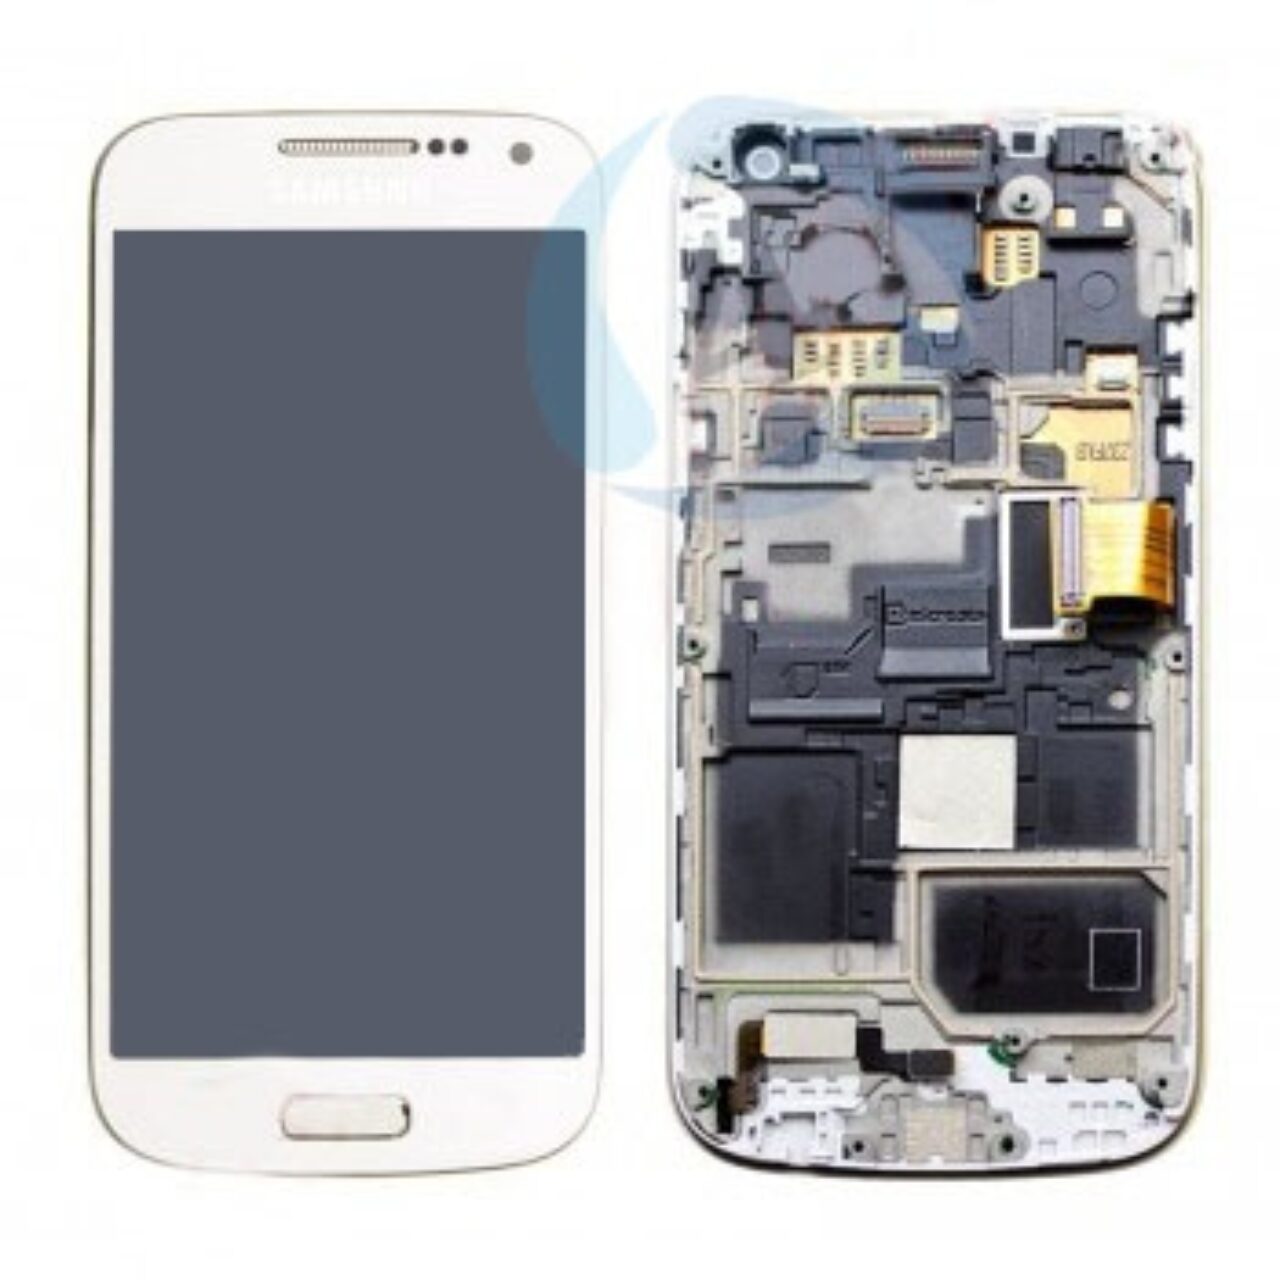 Samsung galaxy s4 mini lcd display white